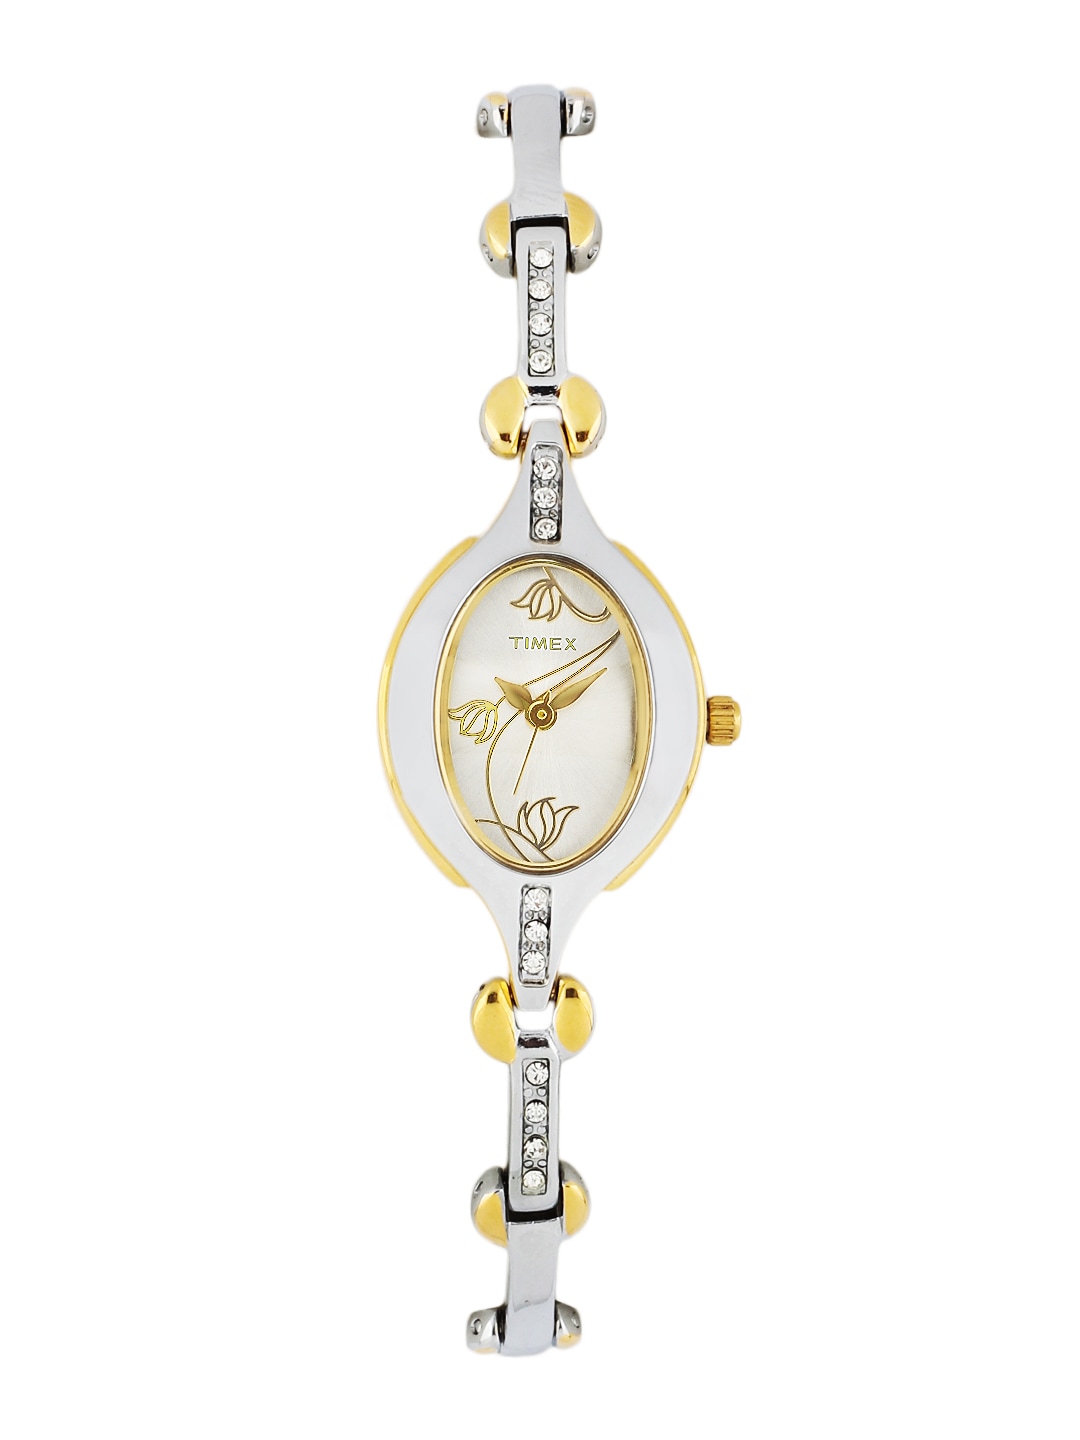 Timex Women White Dial Watch M302